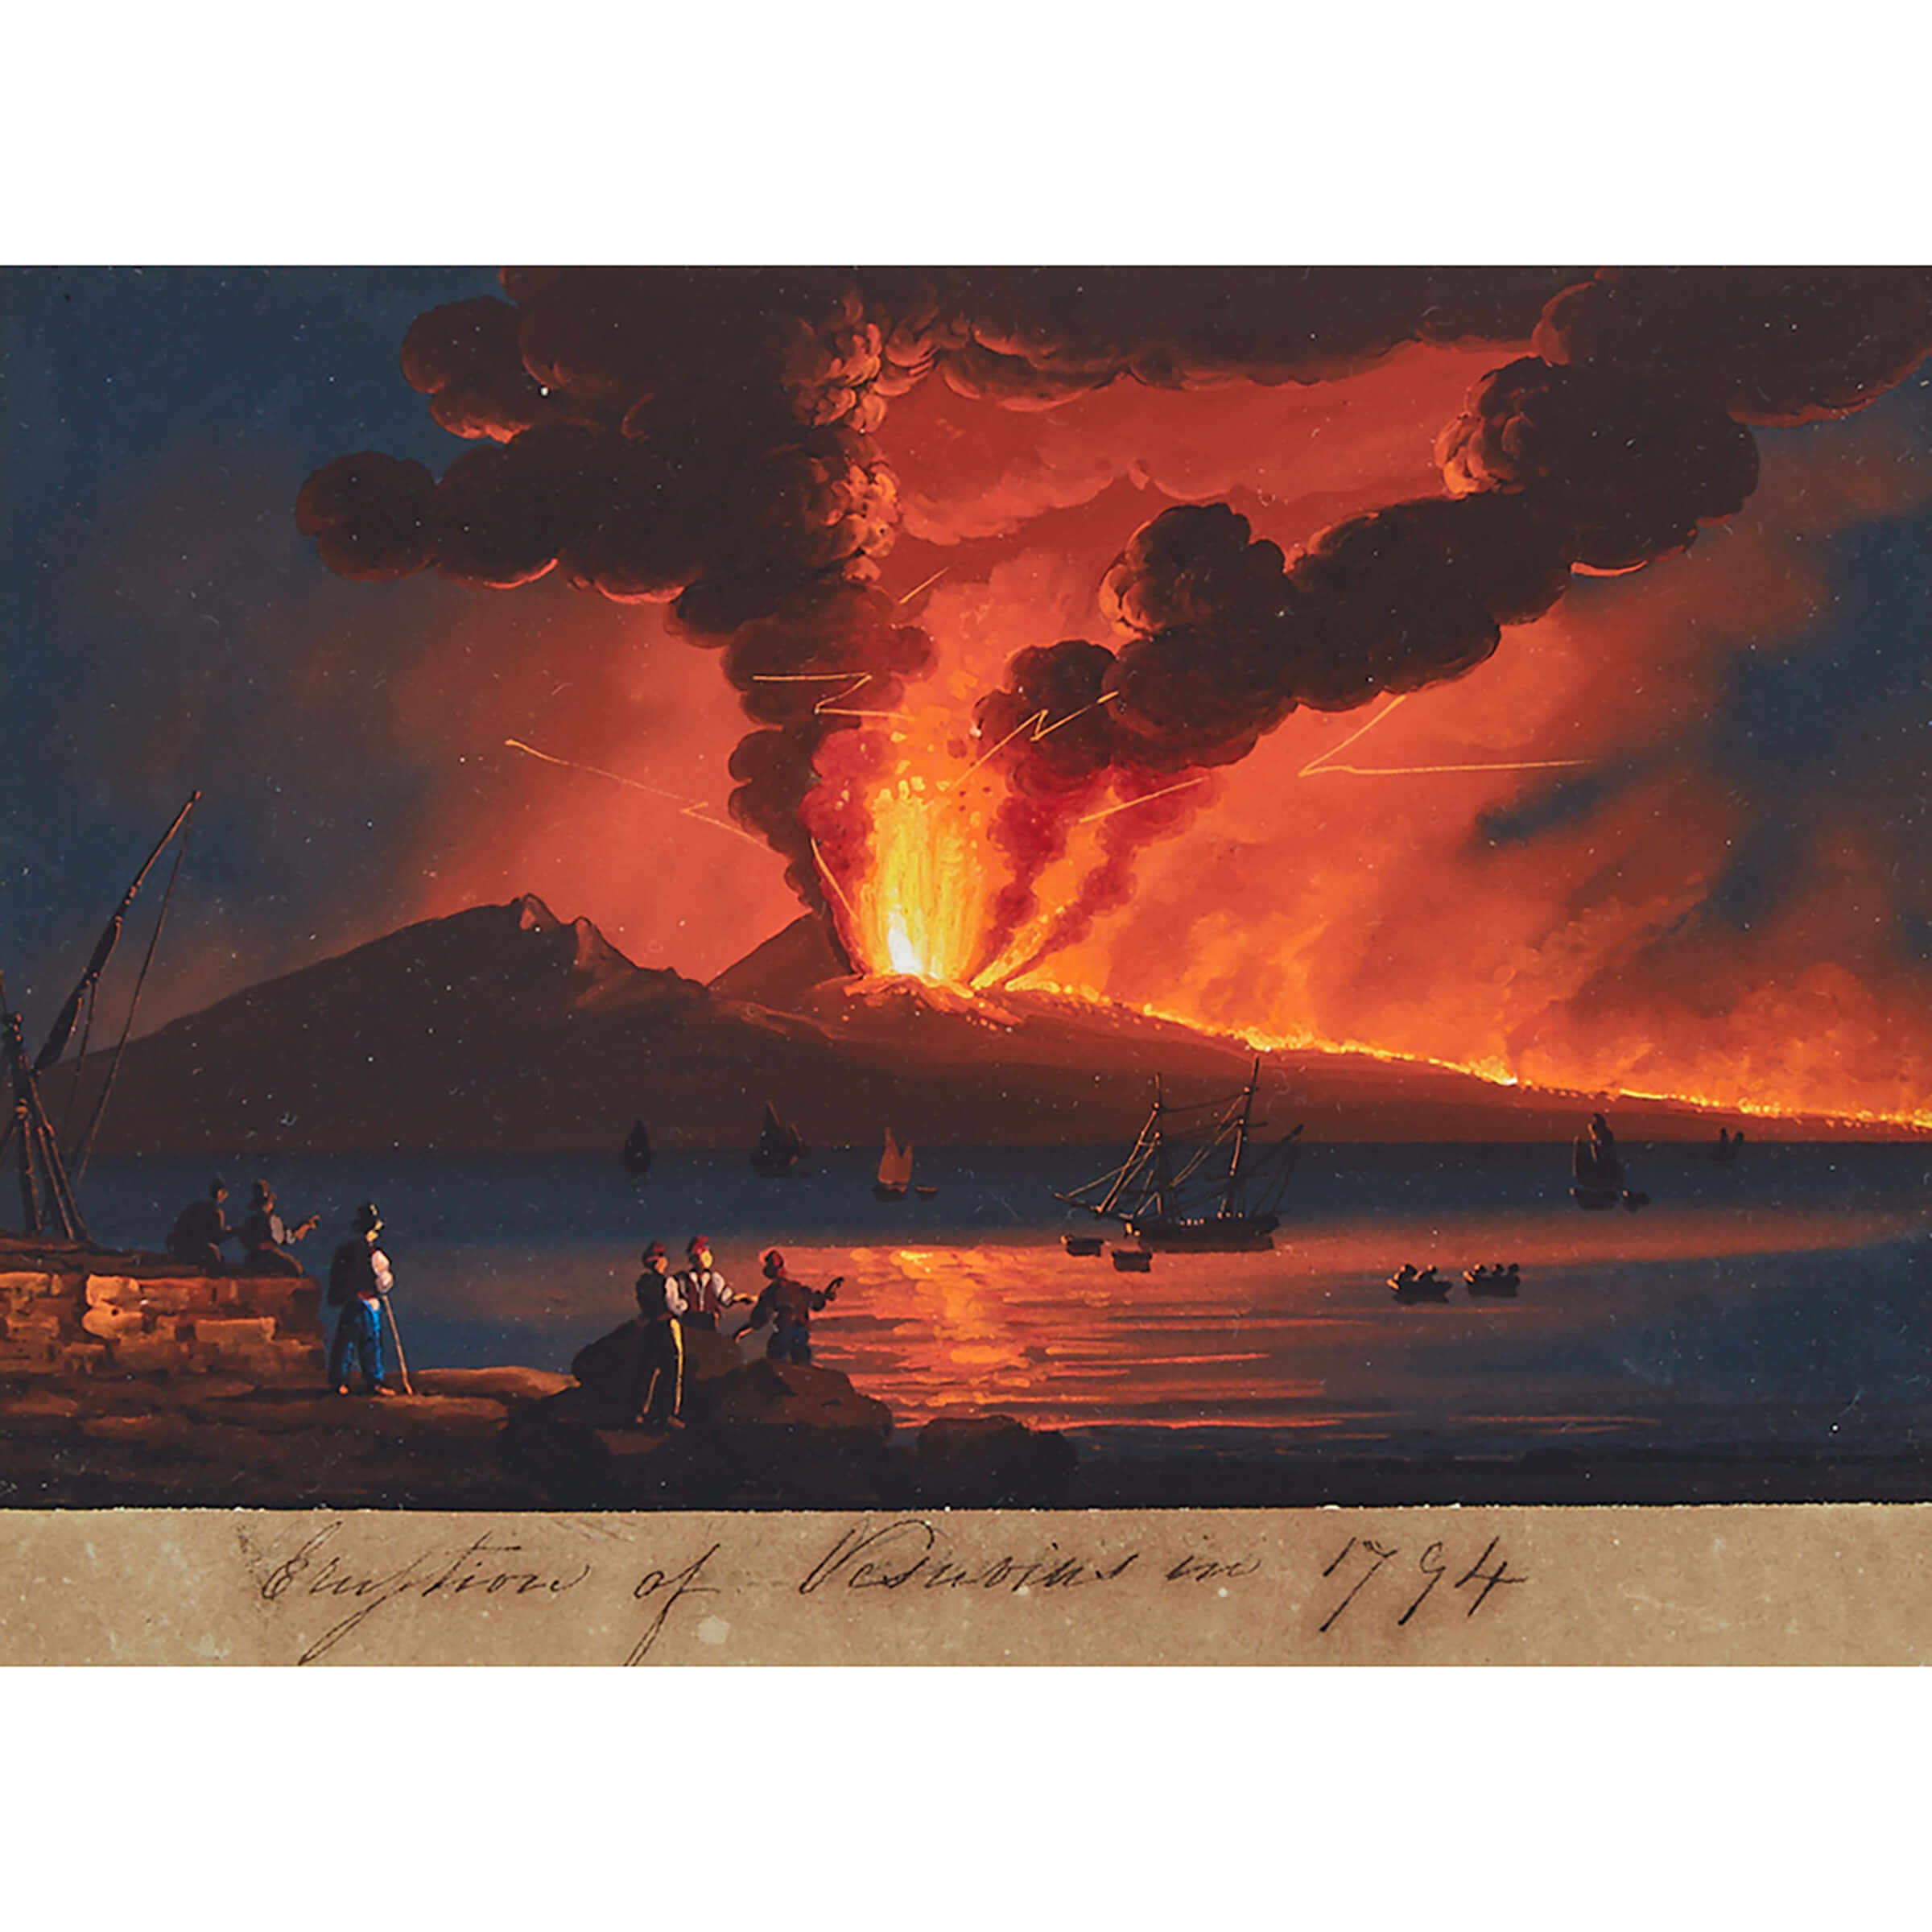 Neapolitan School Night View of the ‘Eruption of Vesuvius in 1794’